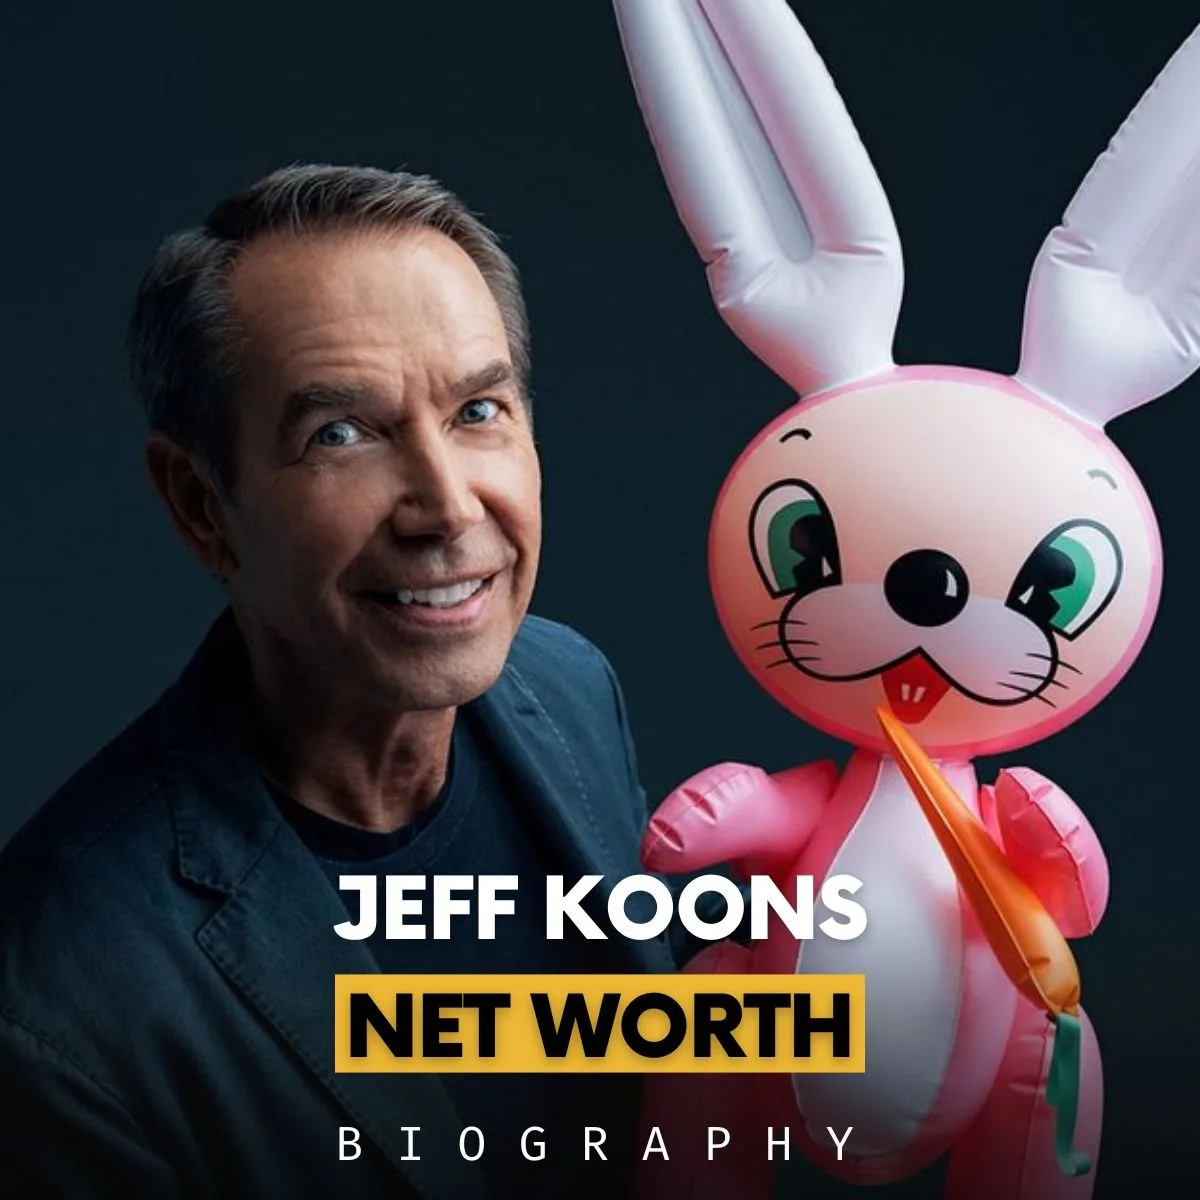 Jeff Koons net worth